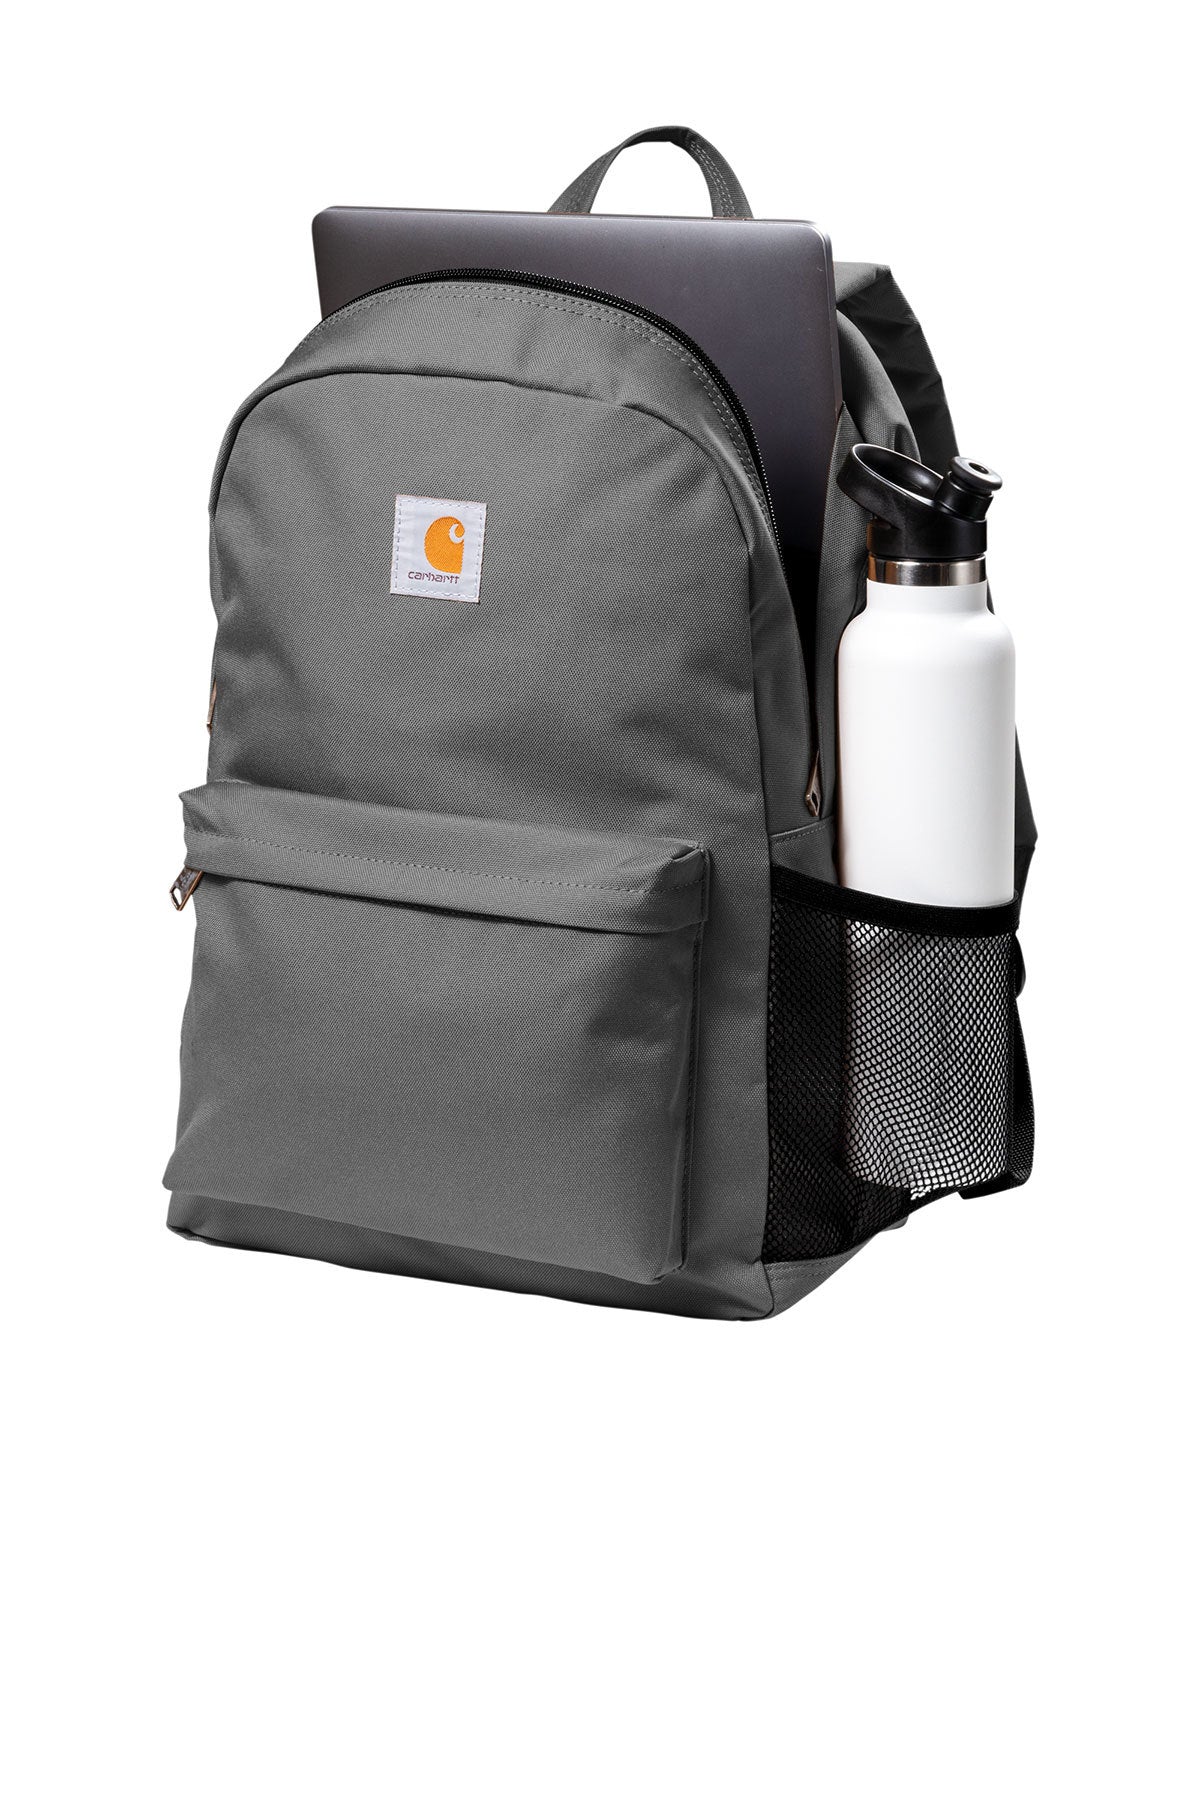 Carhartt Canvas Branded Backpacks, Grey